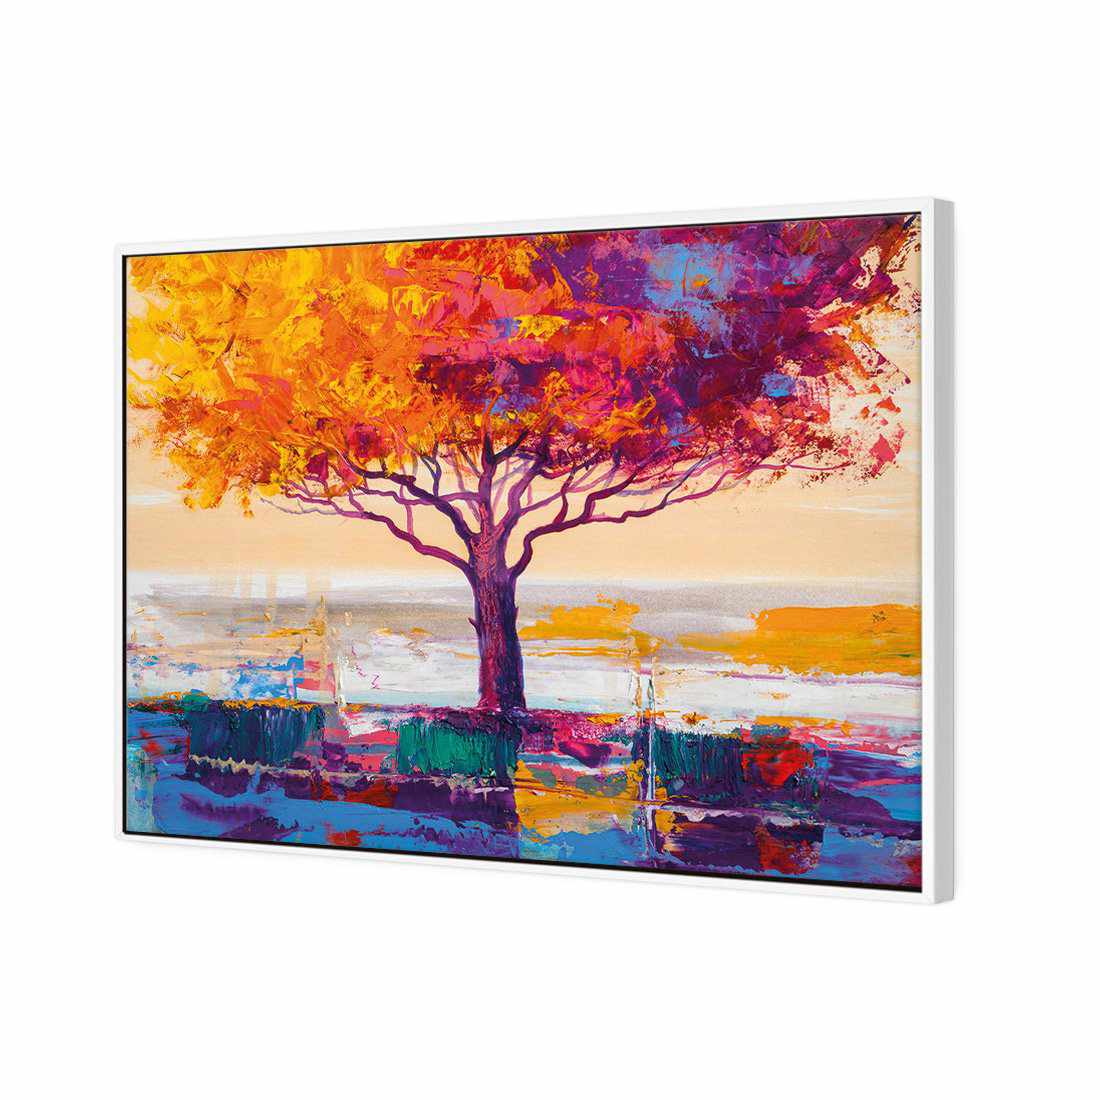 Dreamtime Tree Canvas Art-Canvas-Wall Art Designs-45x30cm-Canvas - White Frame-Wall Art Designs